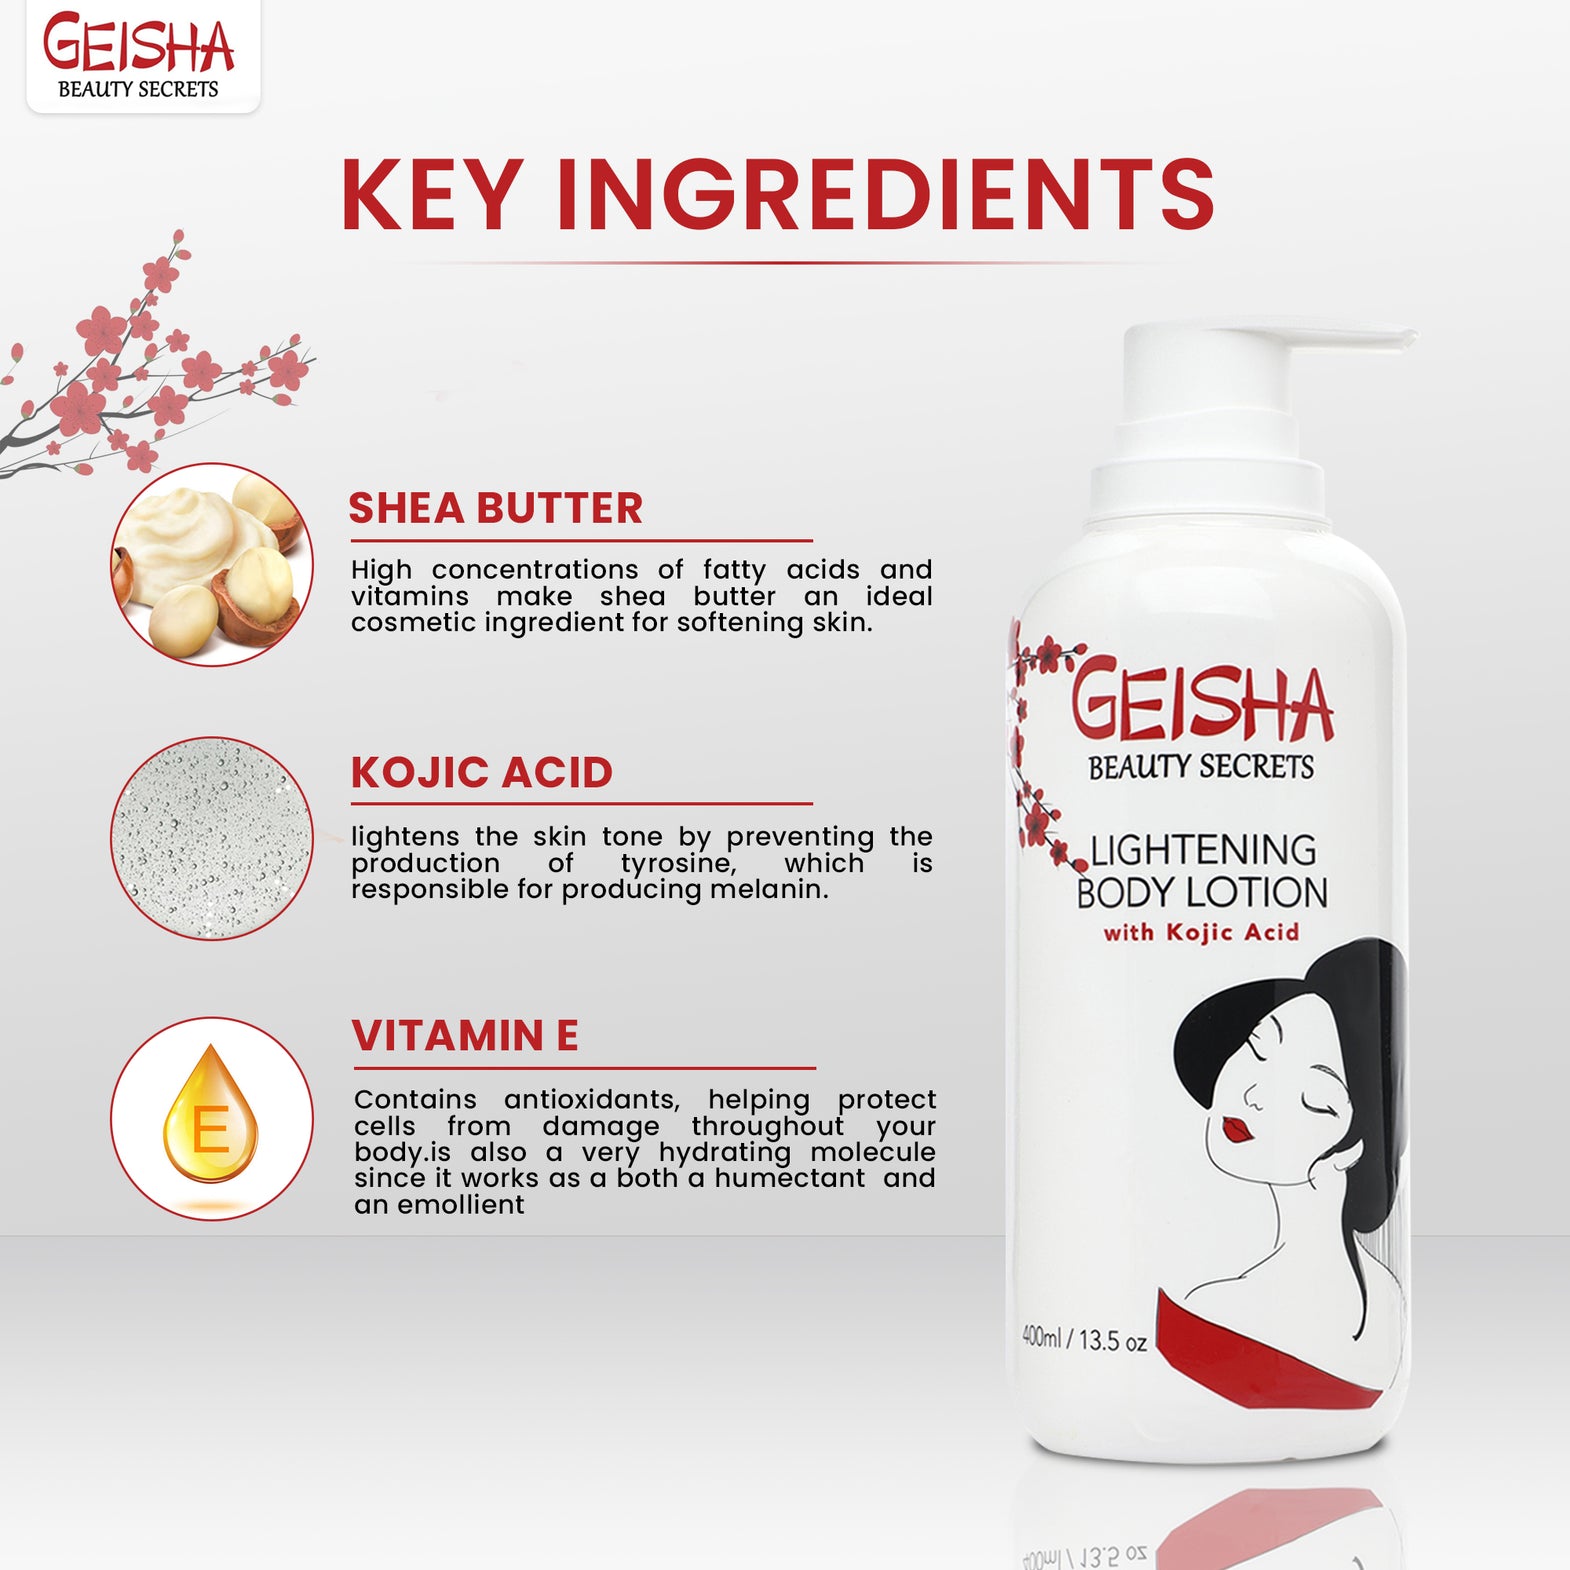 Geisha Beauty Secrets Brightening Body Lotion with Kojic Acid 400ml